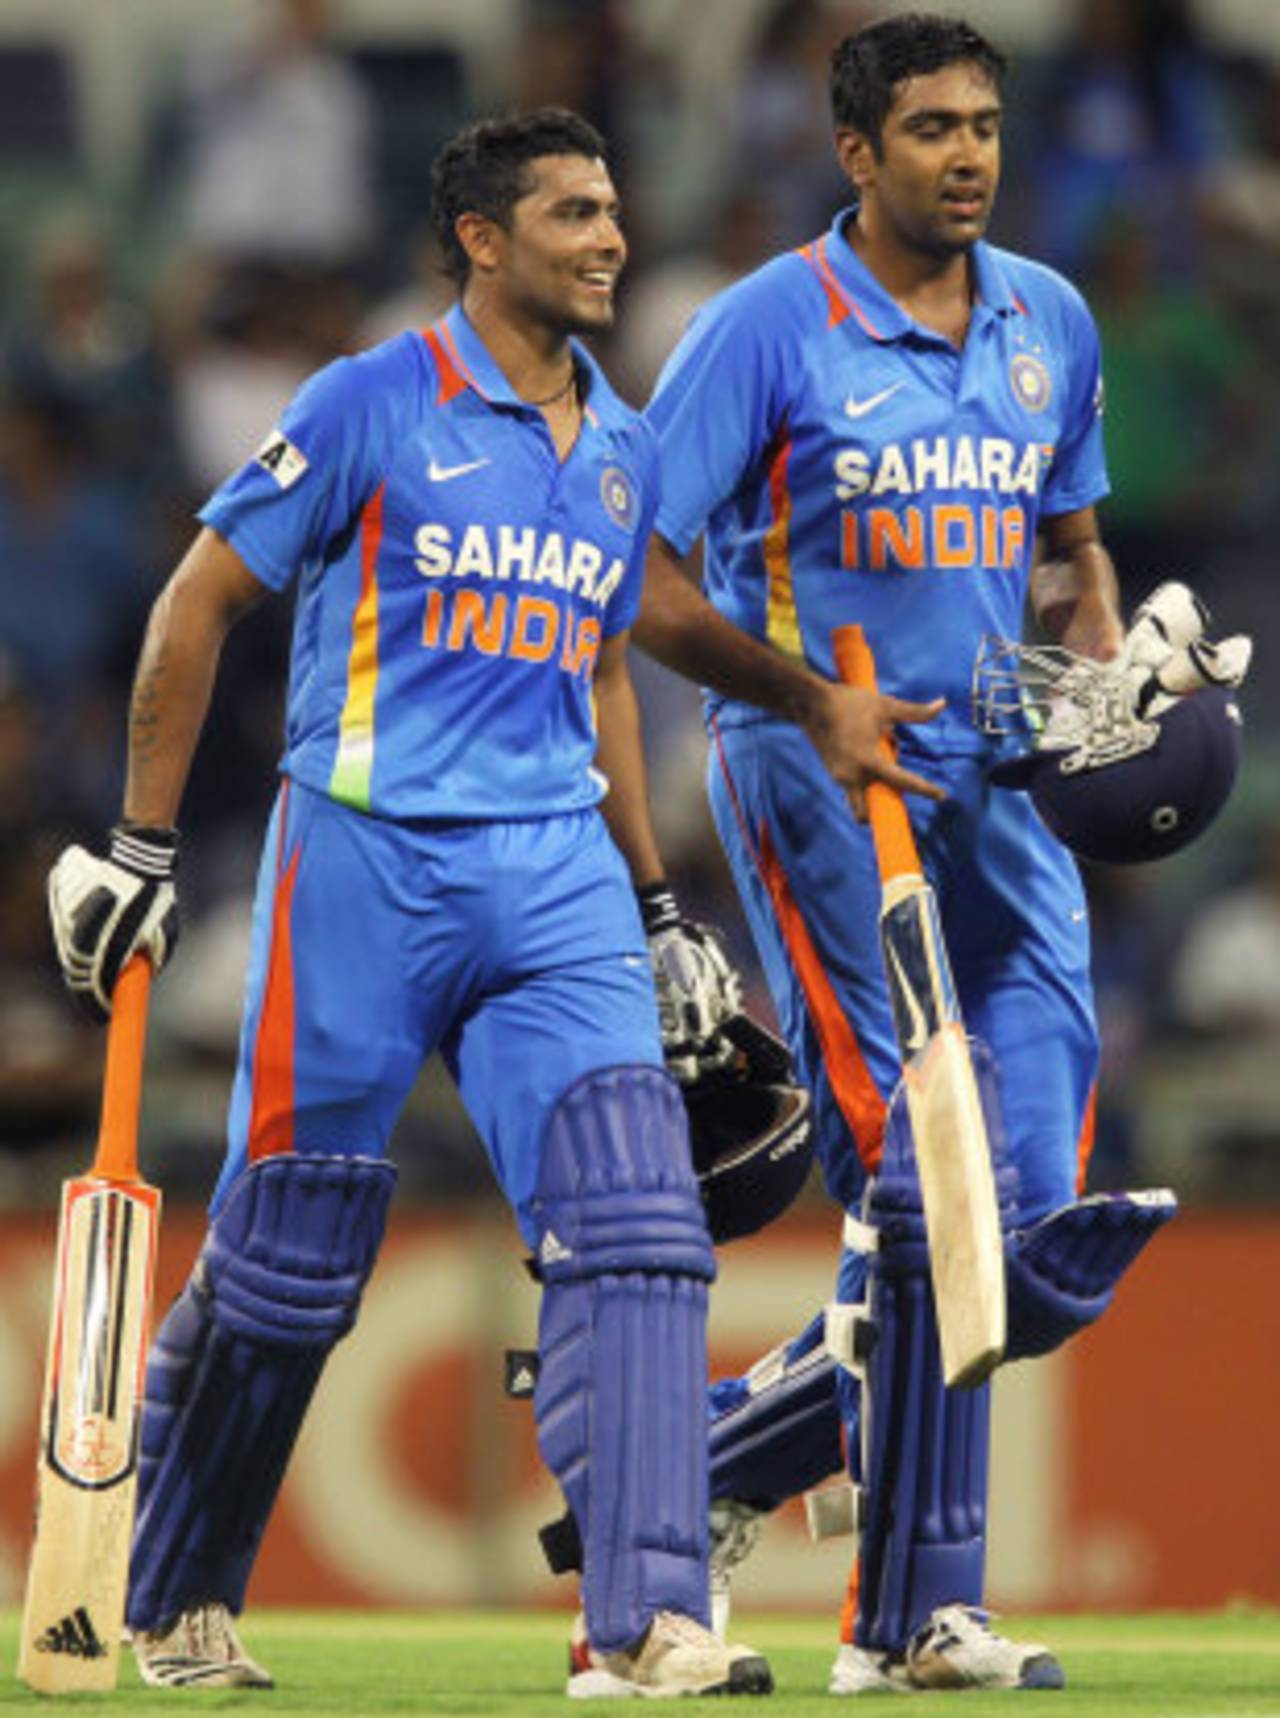 Ravindra Jadeja and R Ashwin walk off after India's win, India v Sri Lanka, CB Series, 2nd ODI, Perth, February 8, 2012